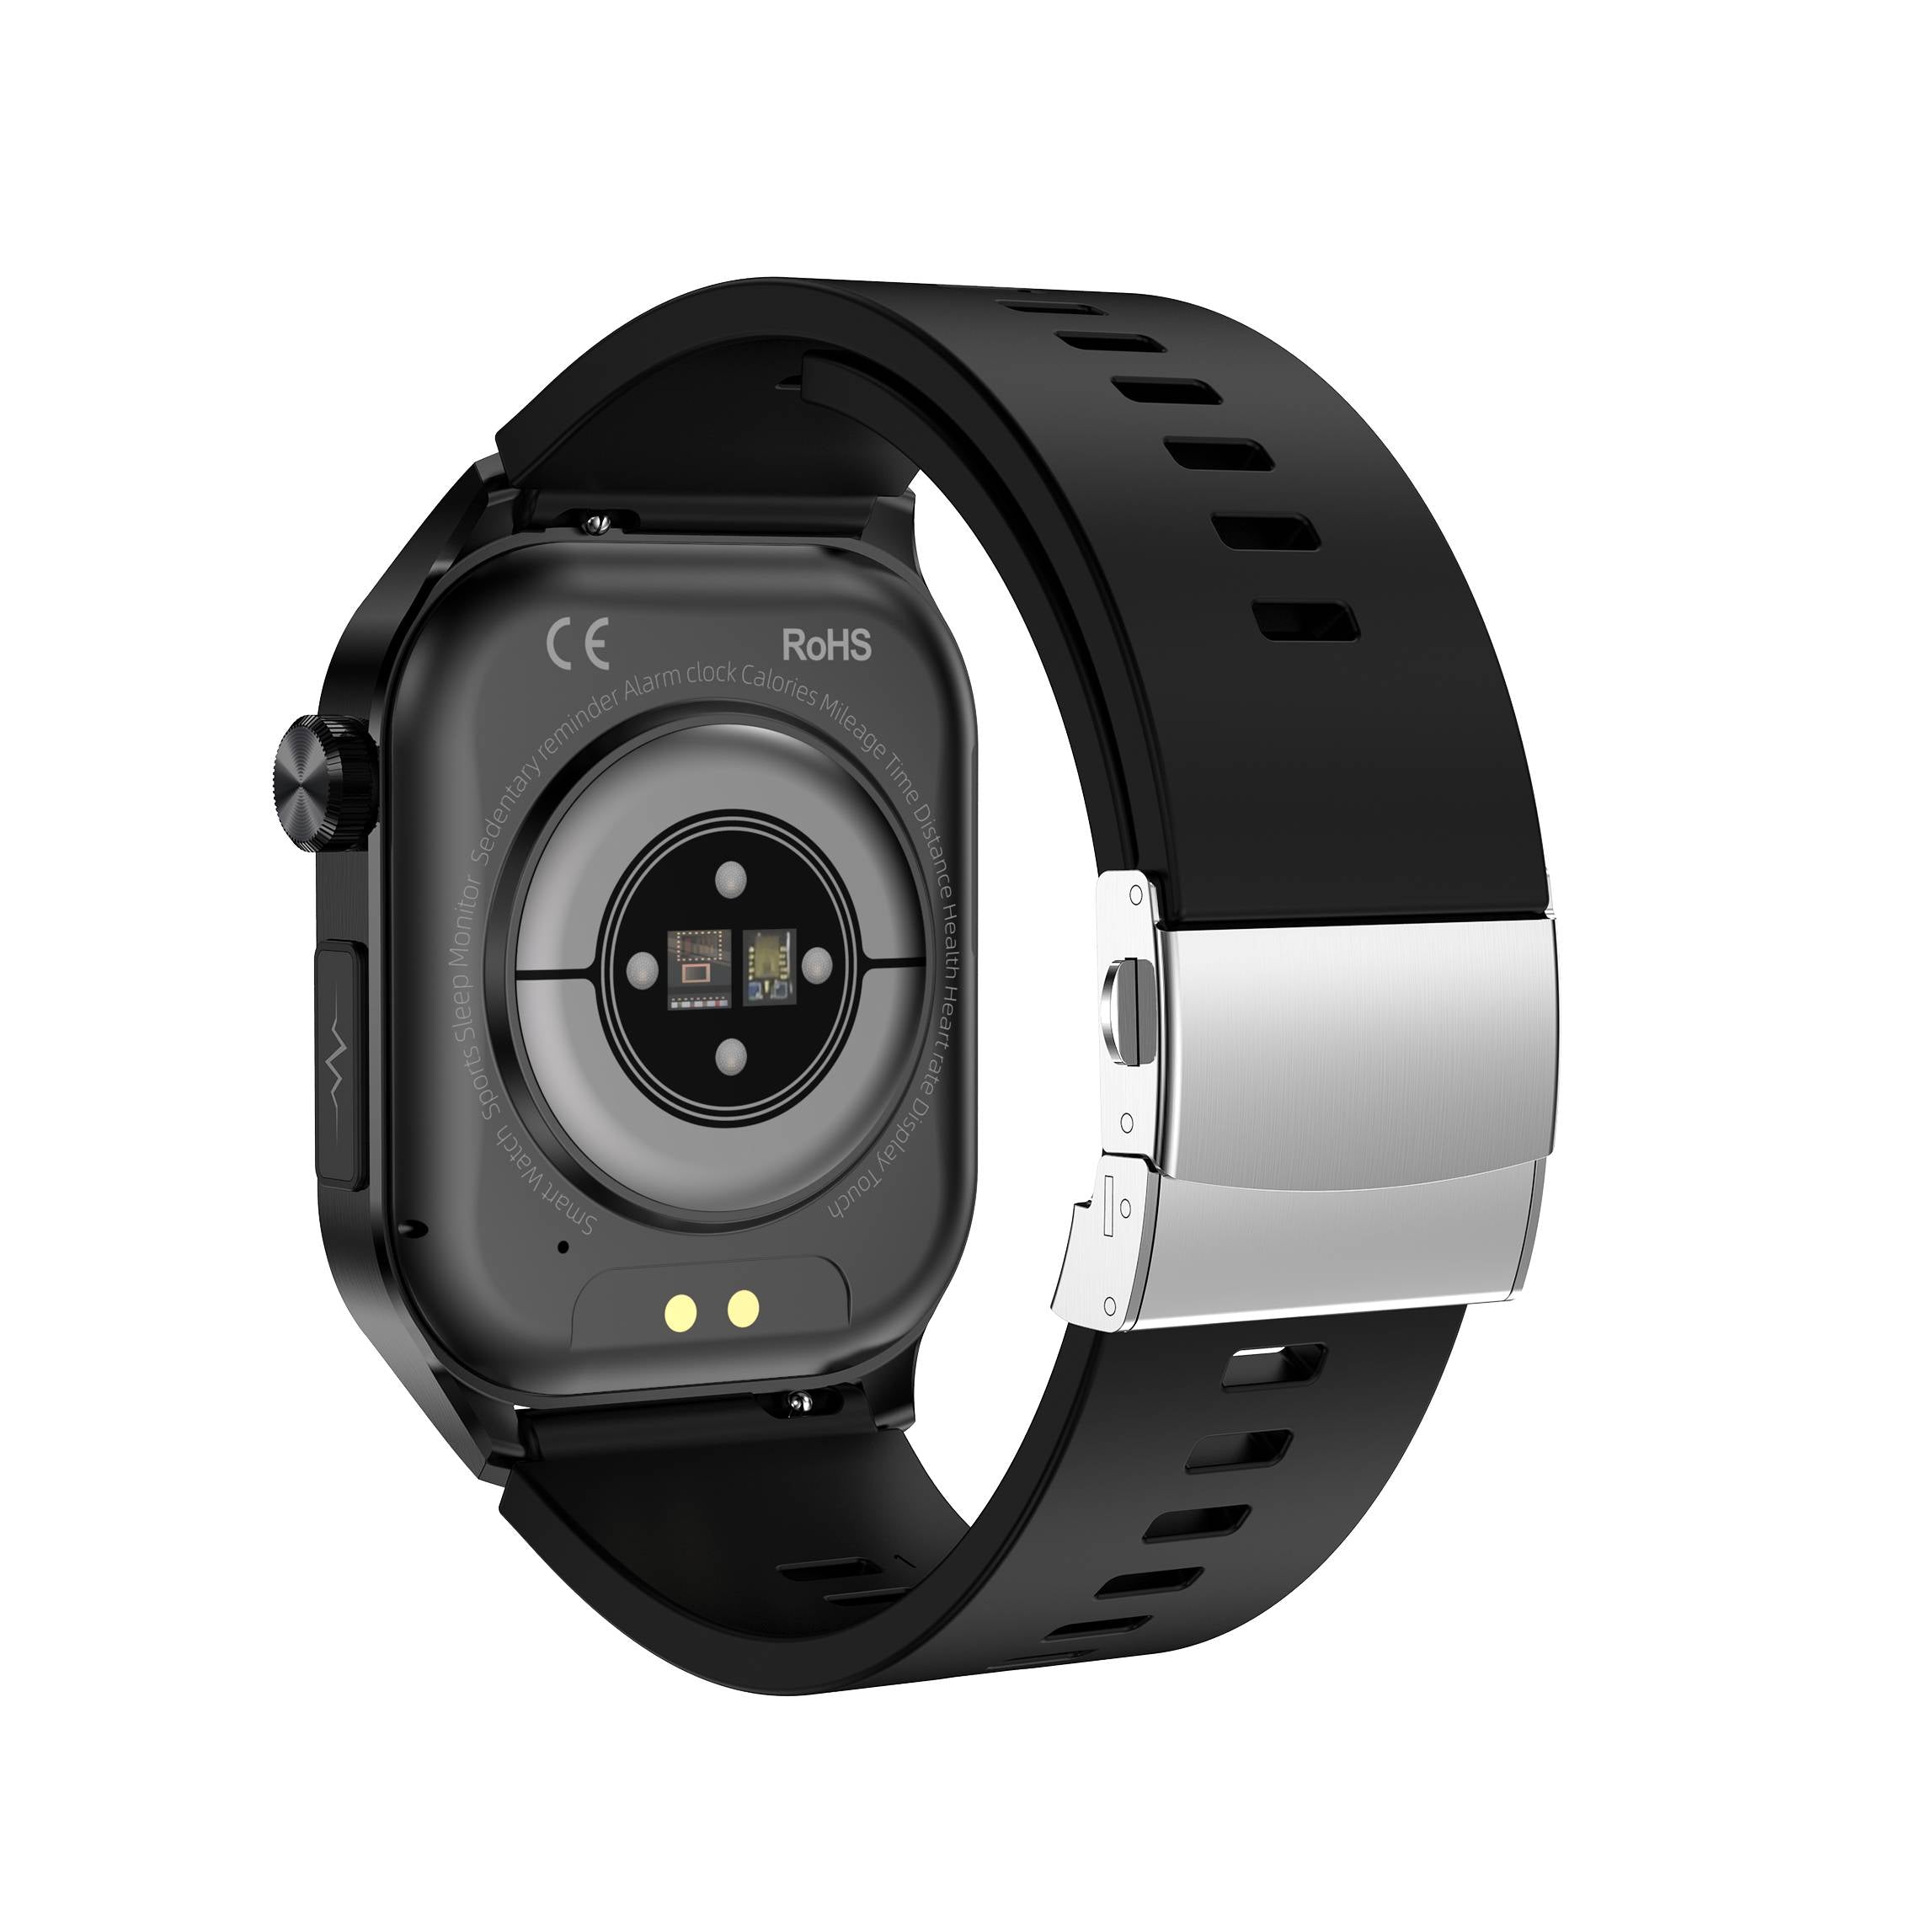 BP Dodctor ECG 10 Multifunctional health monitoring smartwatch